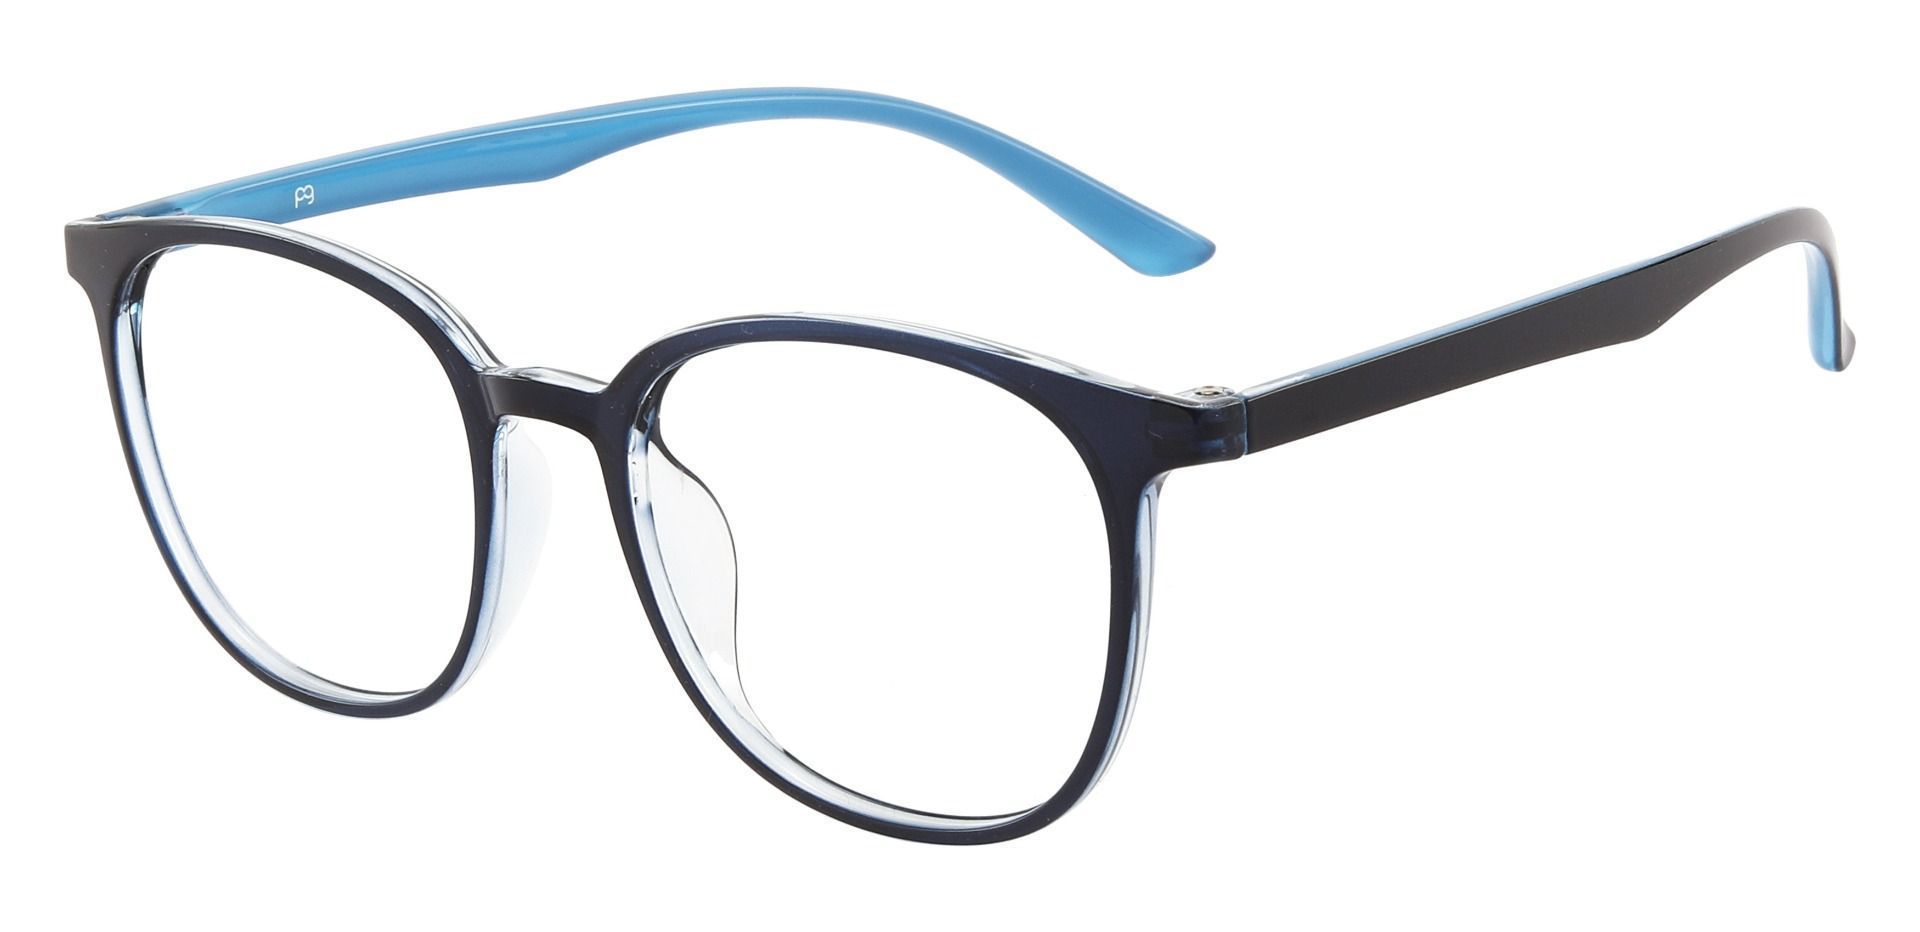 Kelso Square Progressive Glasses - Blue